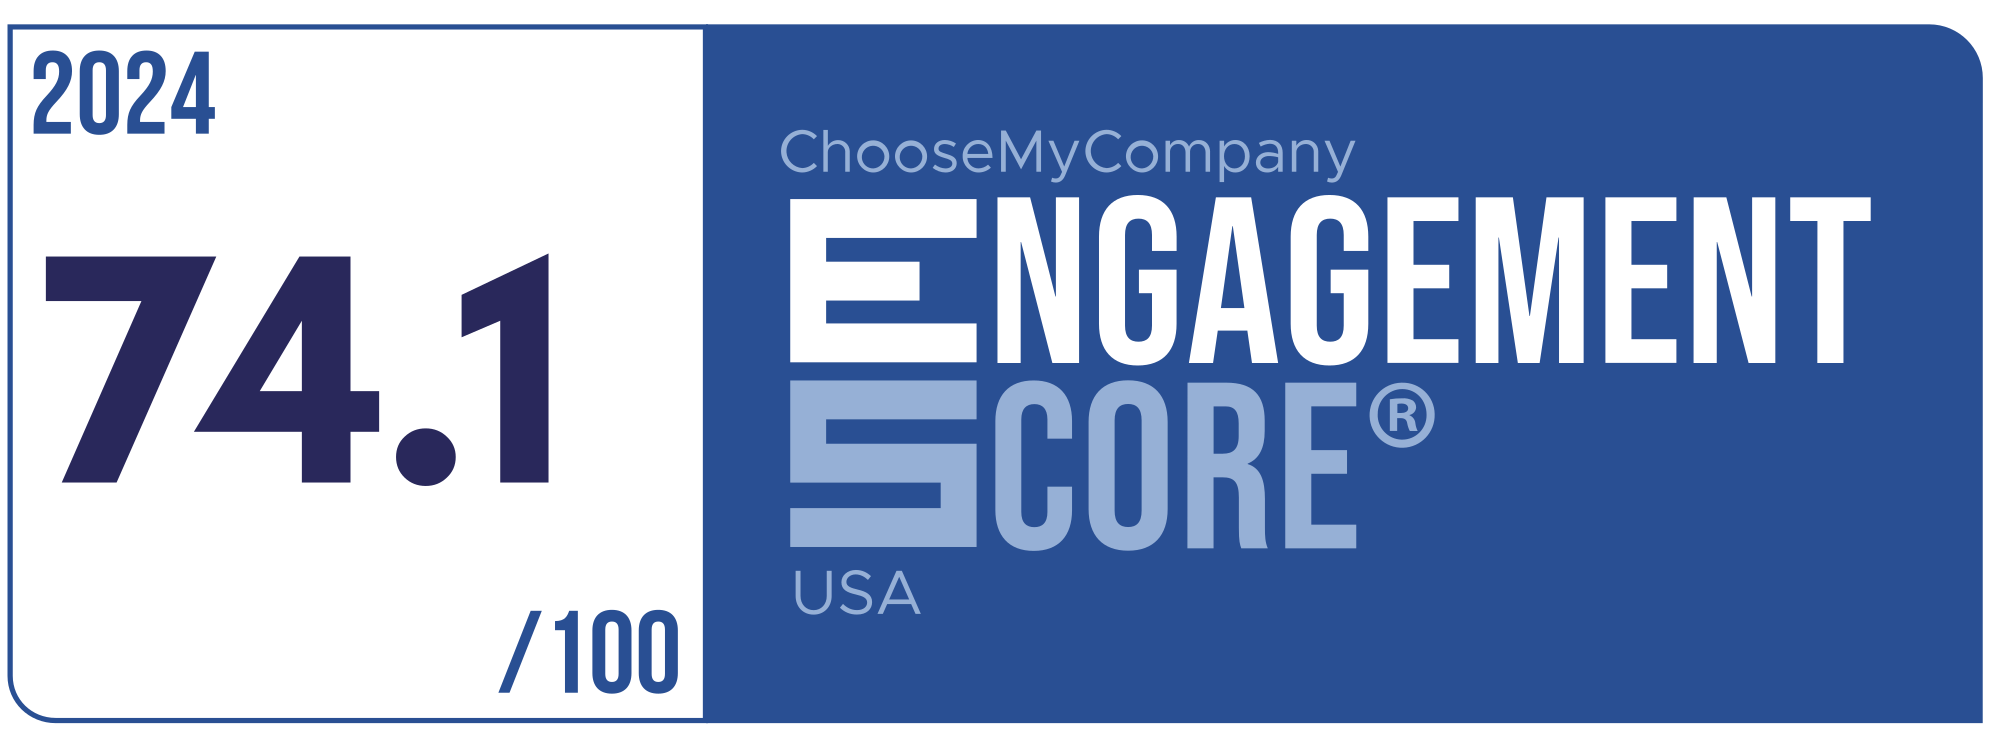 Label Engagement Score 2024 USA